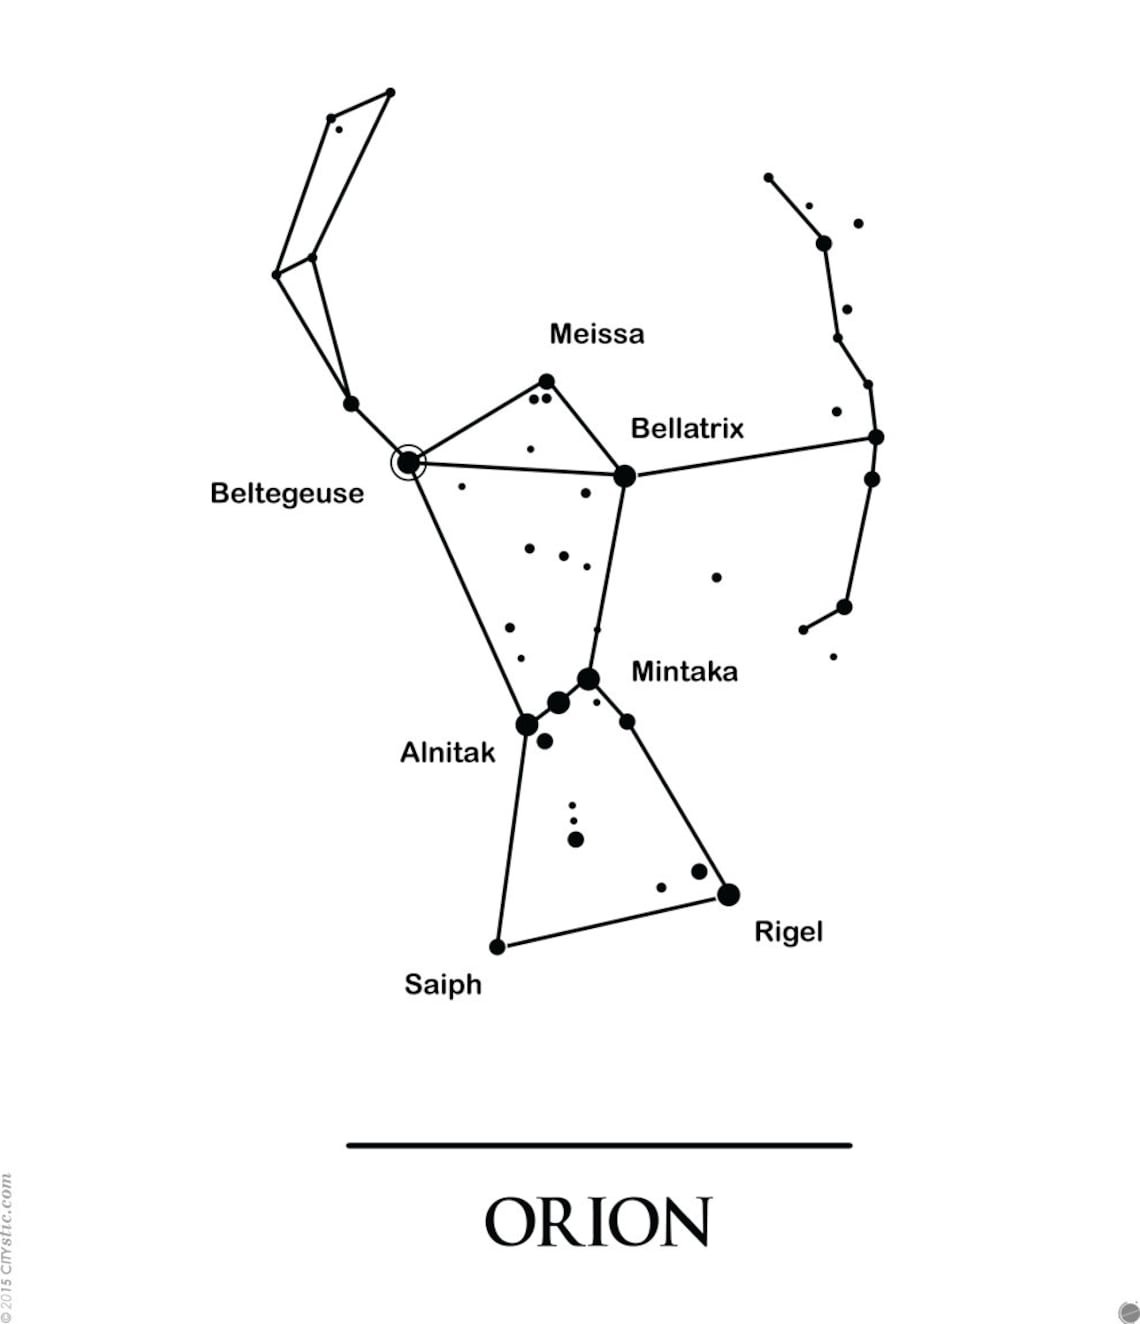 Созвездие орион названо. Созвездие Орион схема. Орион Созвездие схема самая яркая звезда. Орион Созвездие схема с названиями звезд по точкам. Созвездие Ориона схема с названиями звезд.